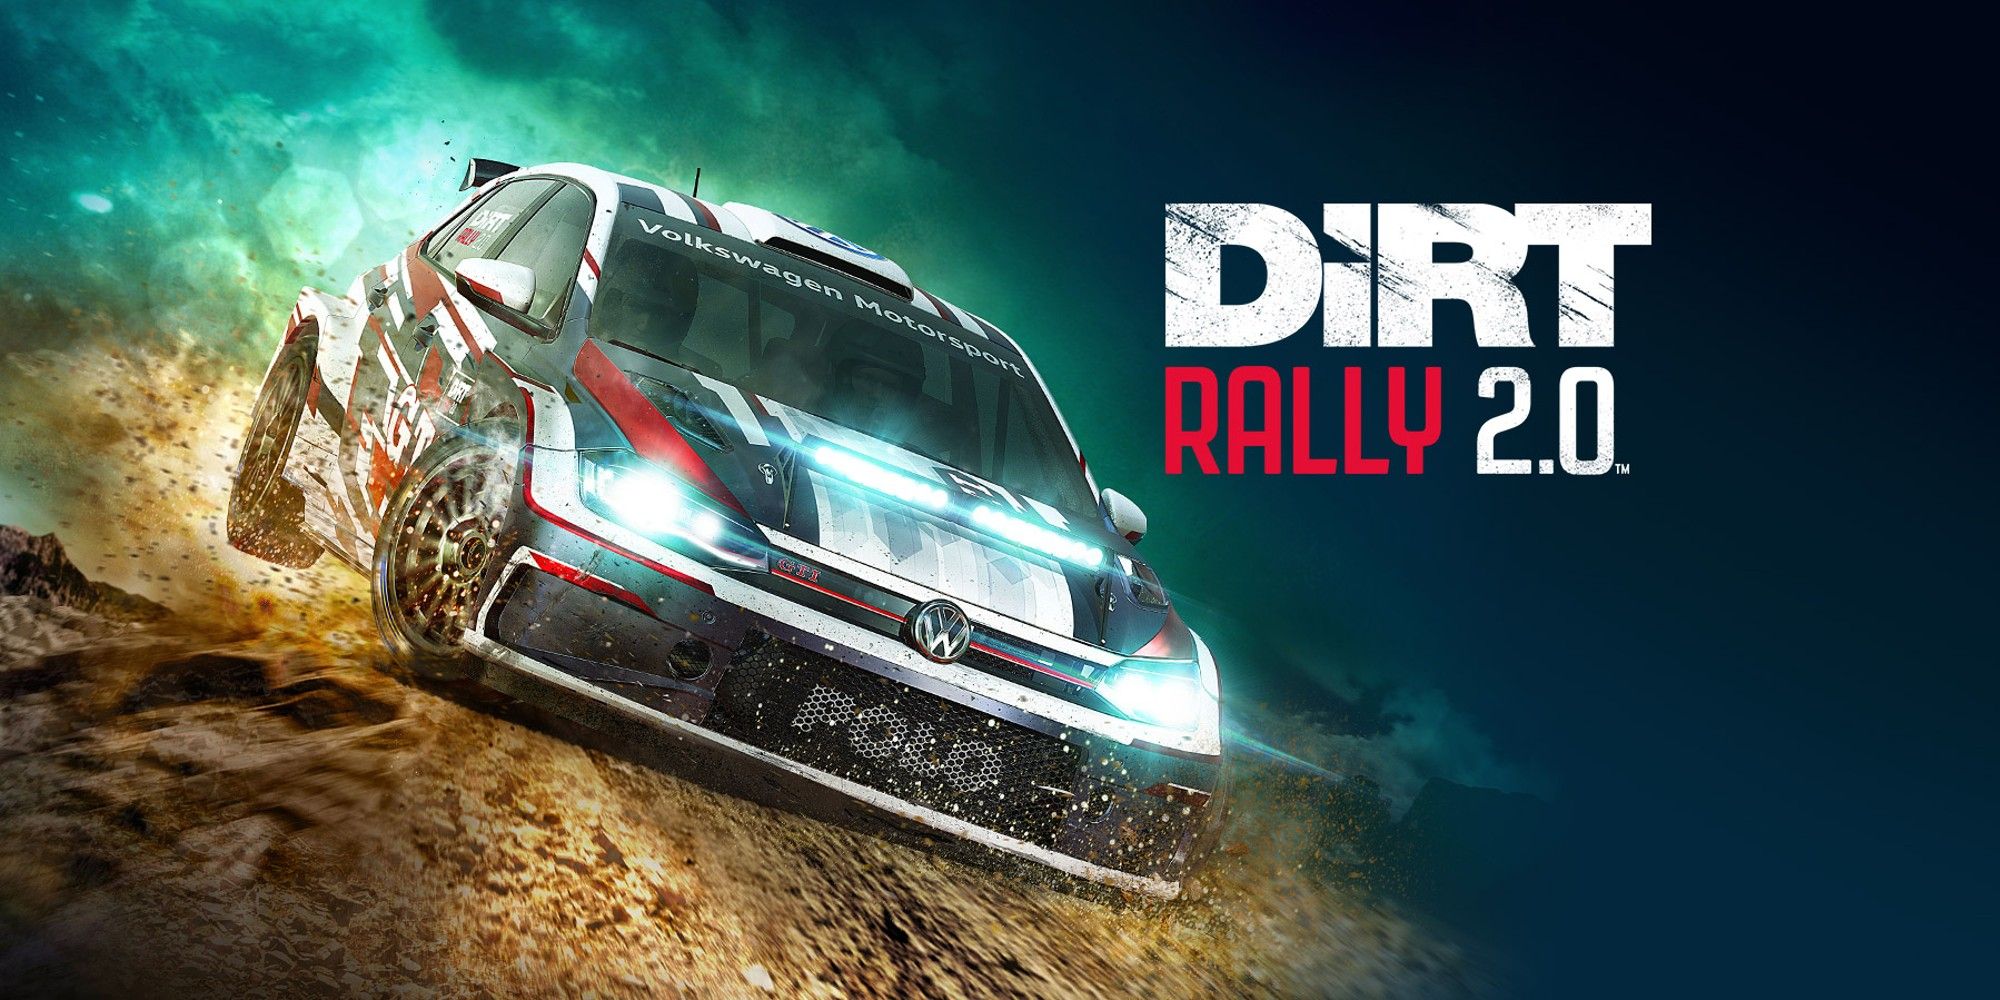 Dirt Rally 2.0 Car blazing across a dirt track